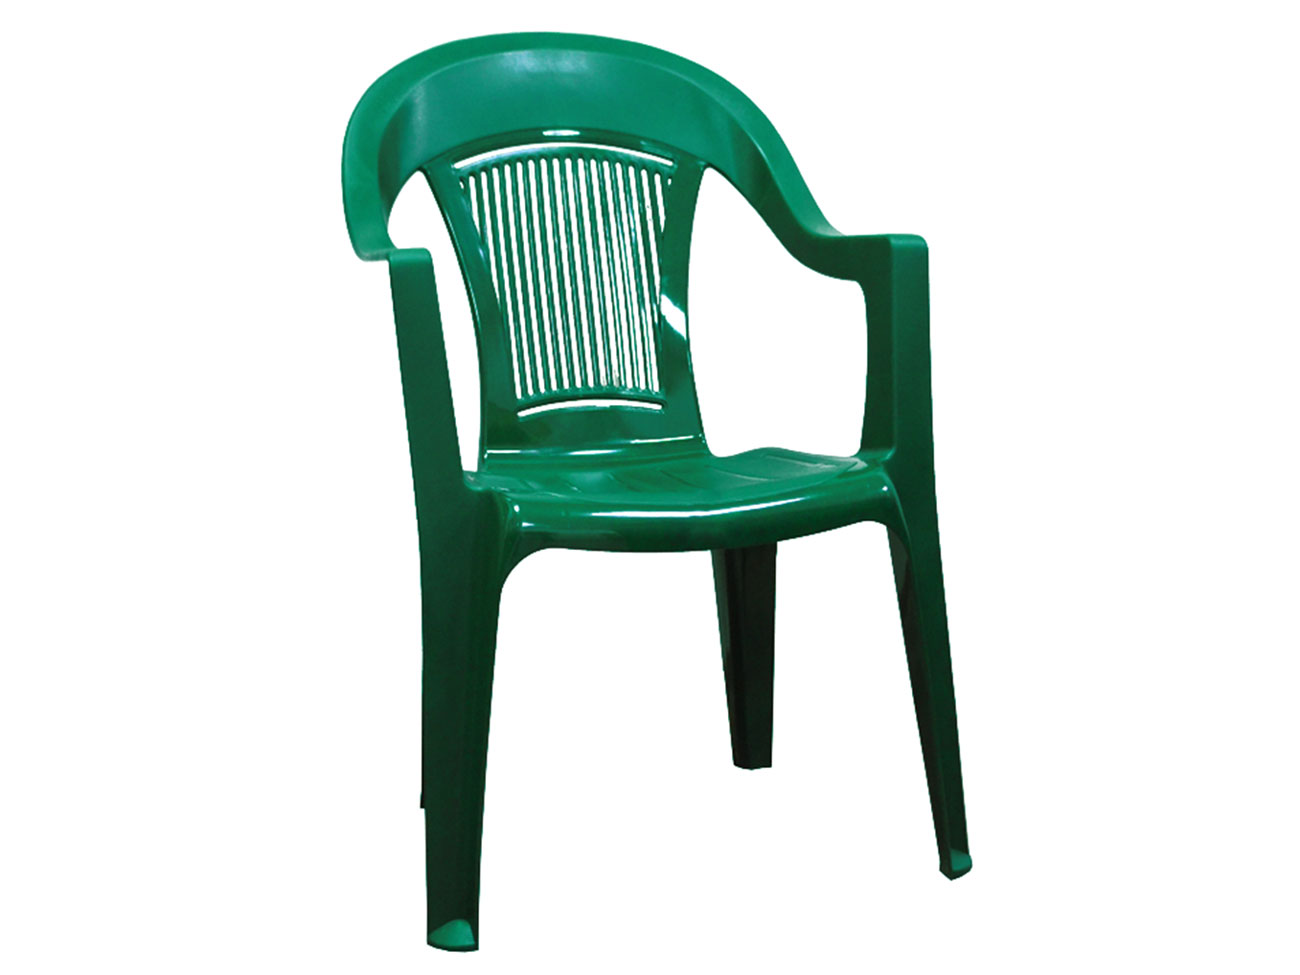 Цена стульев из пластика